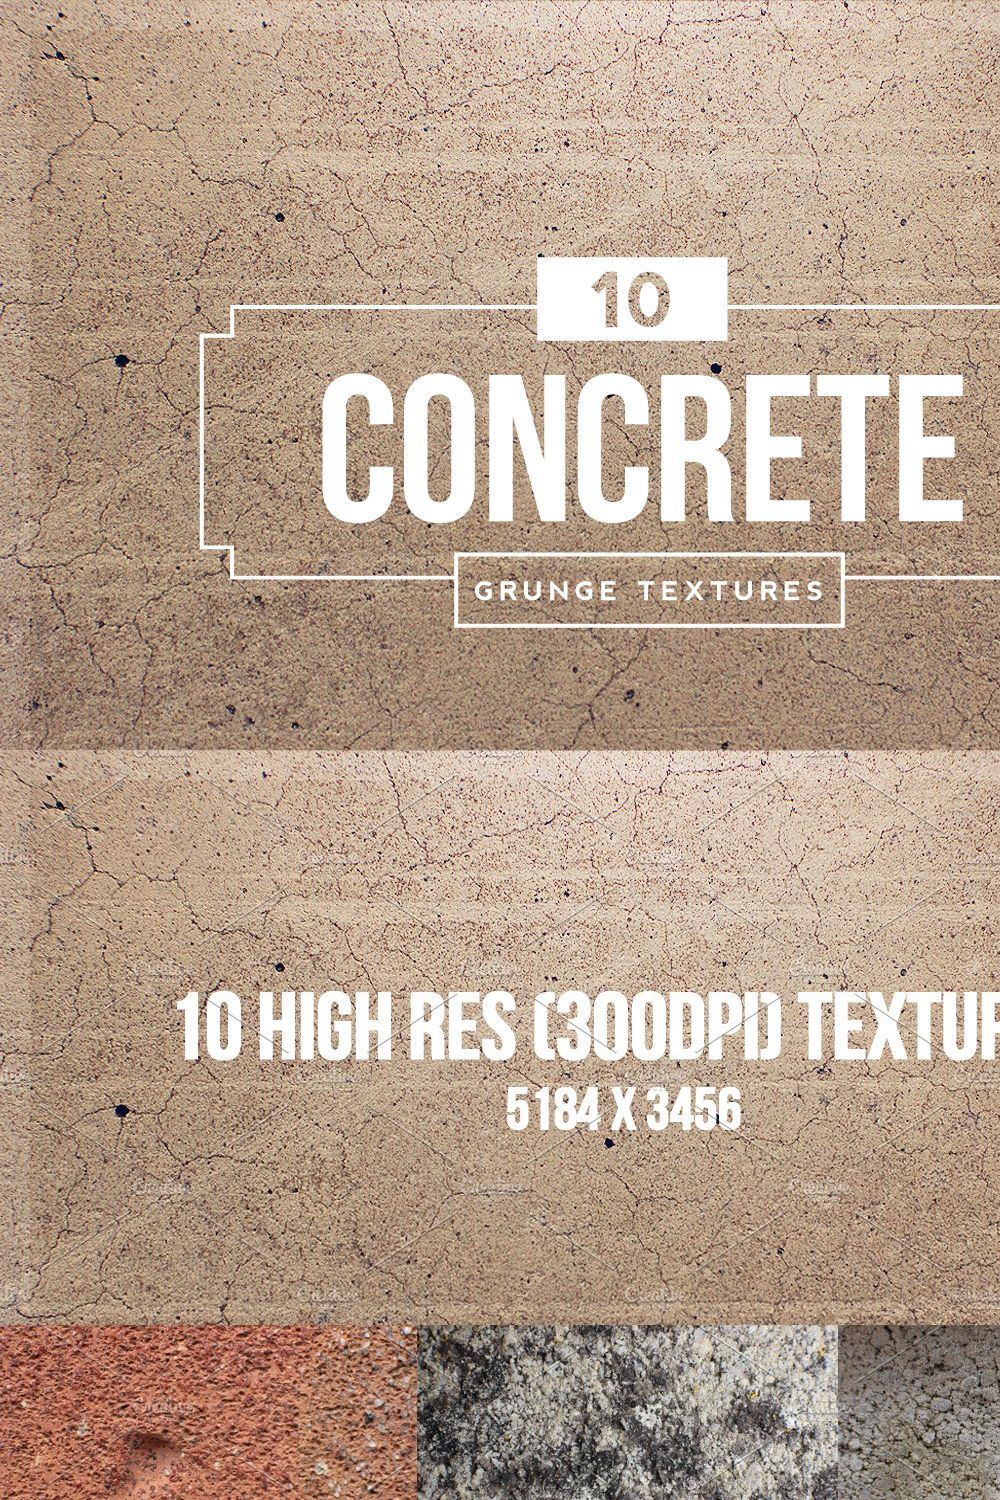 10 Concrete Grunge Textures pinterest preview image.